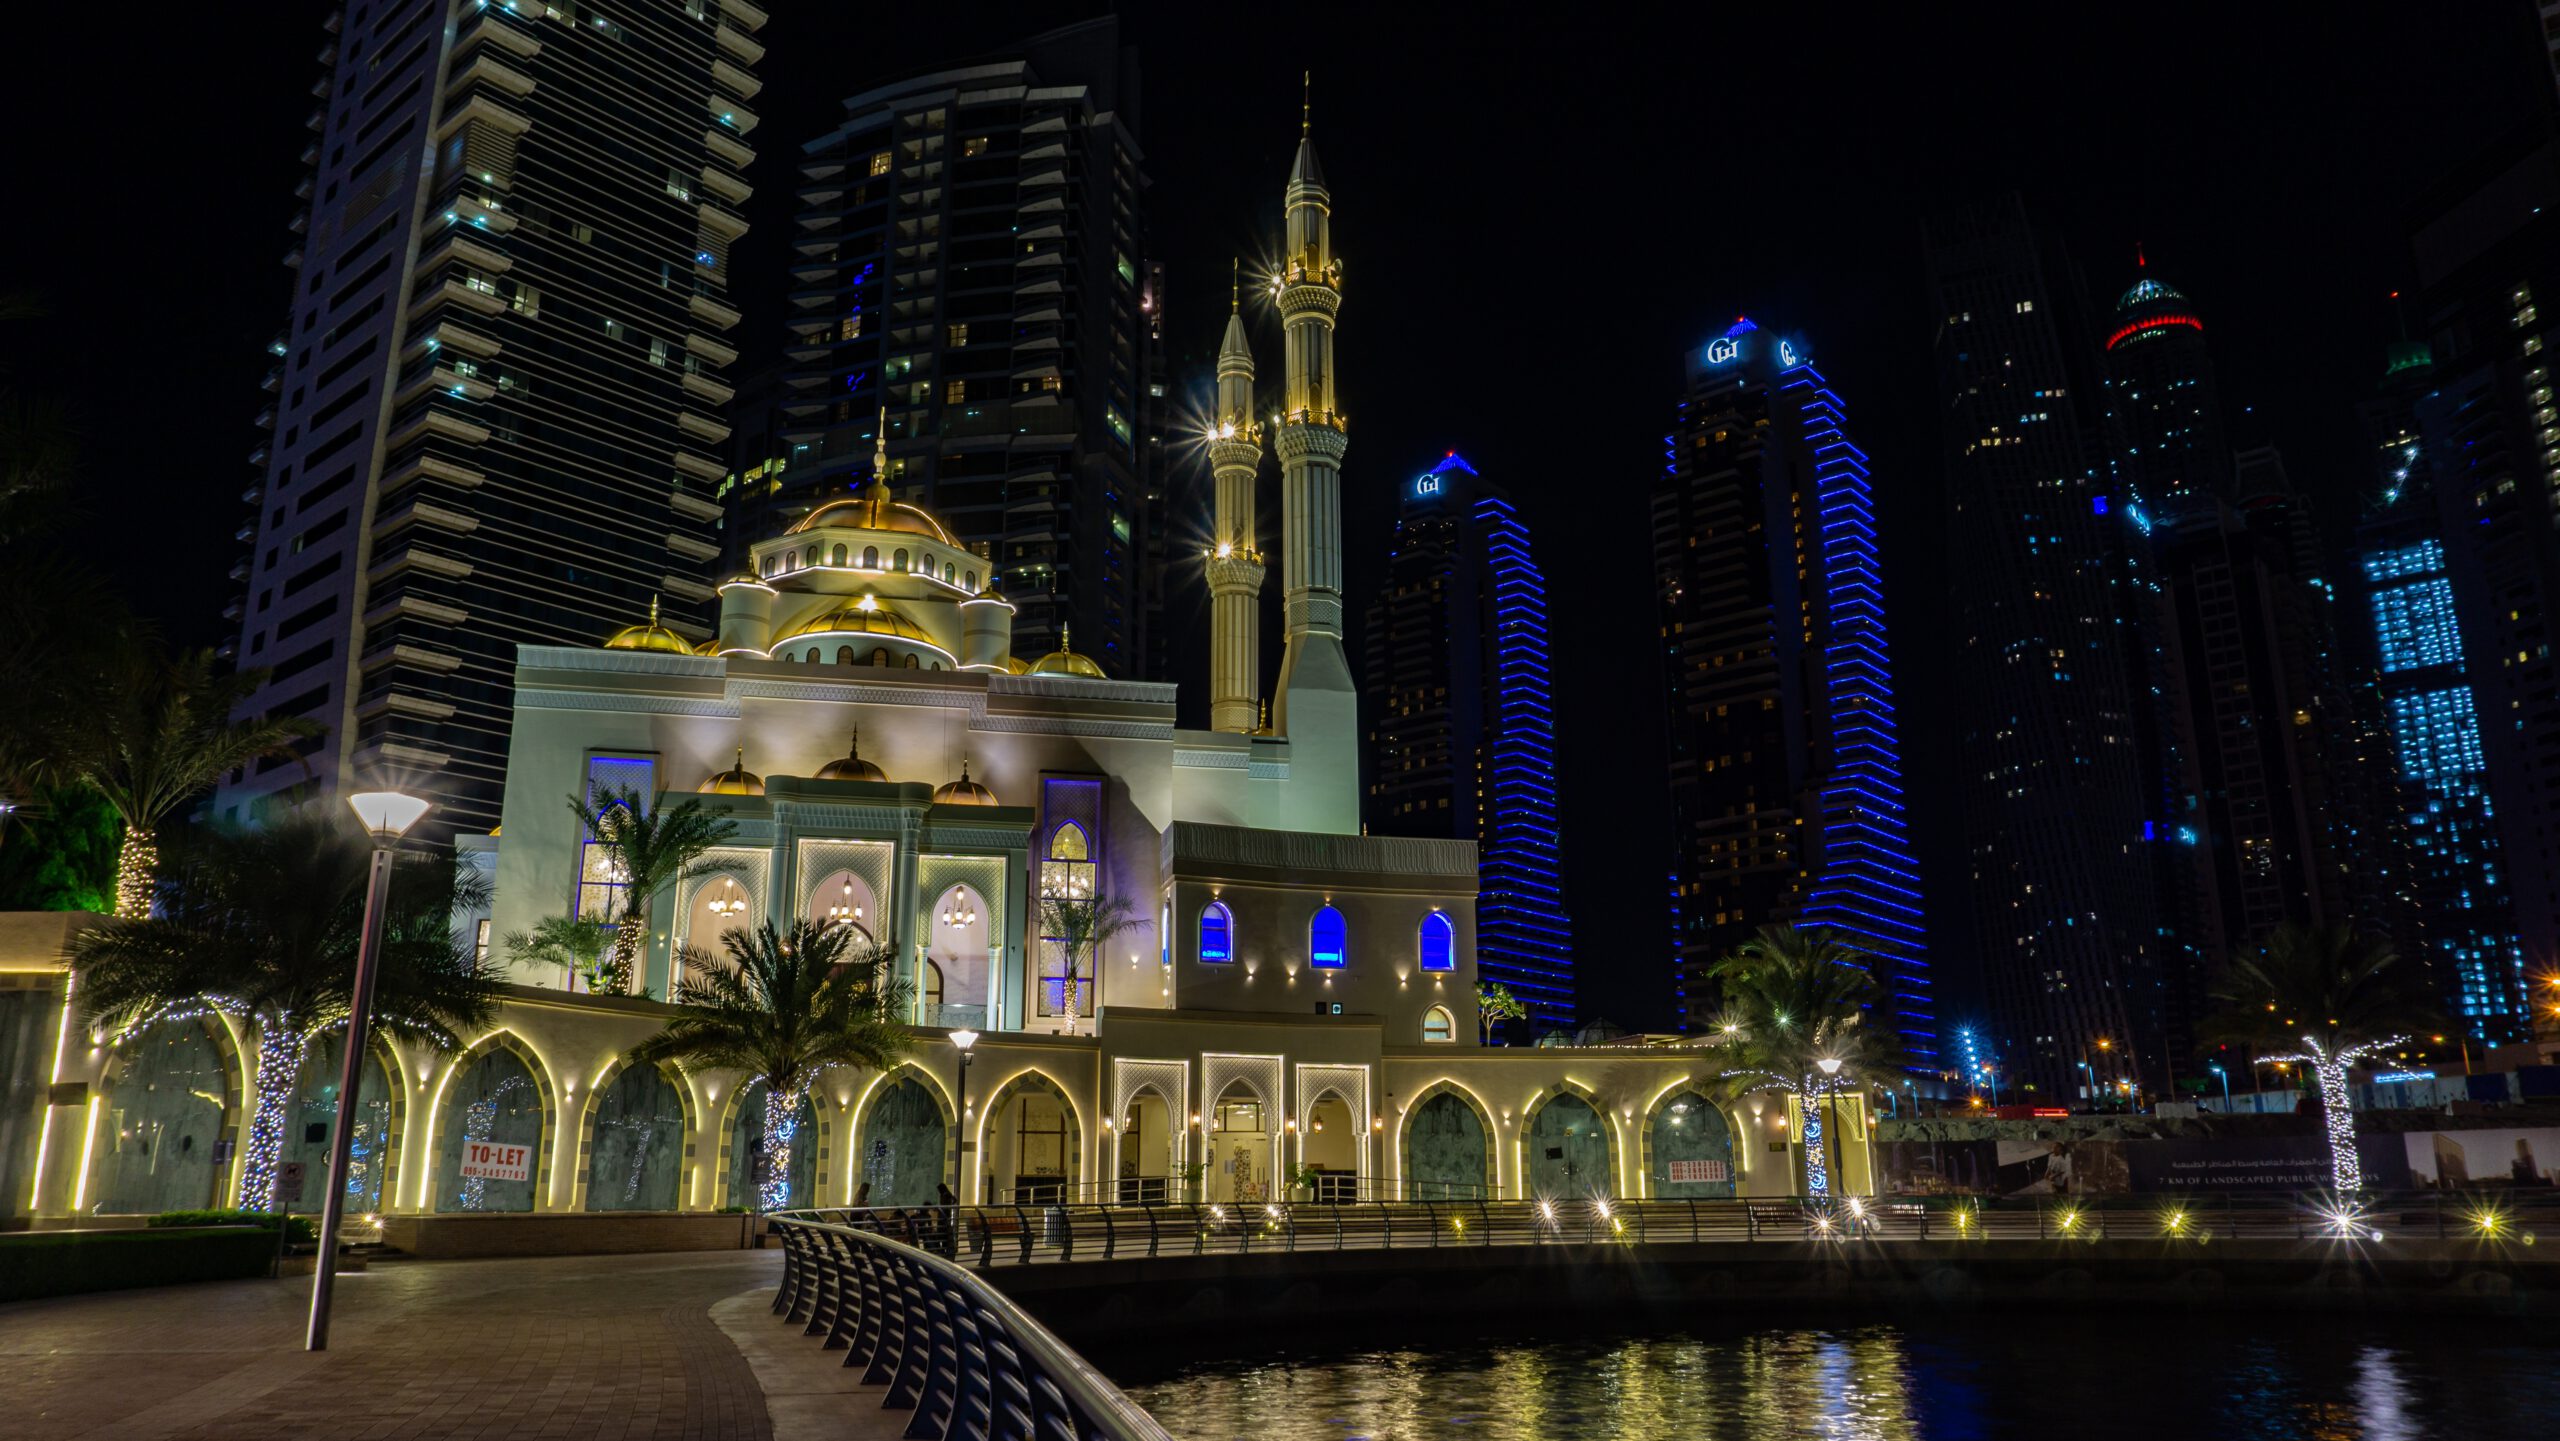 Dubai Customs and Traditions - Dubai Marina mosque at night